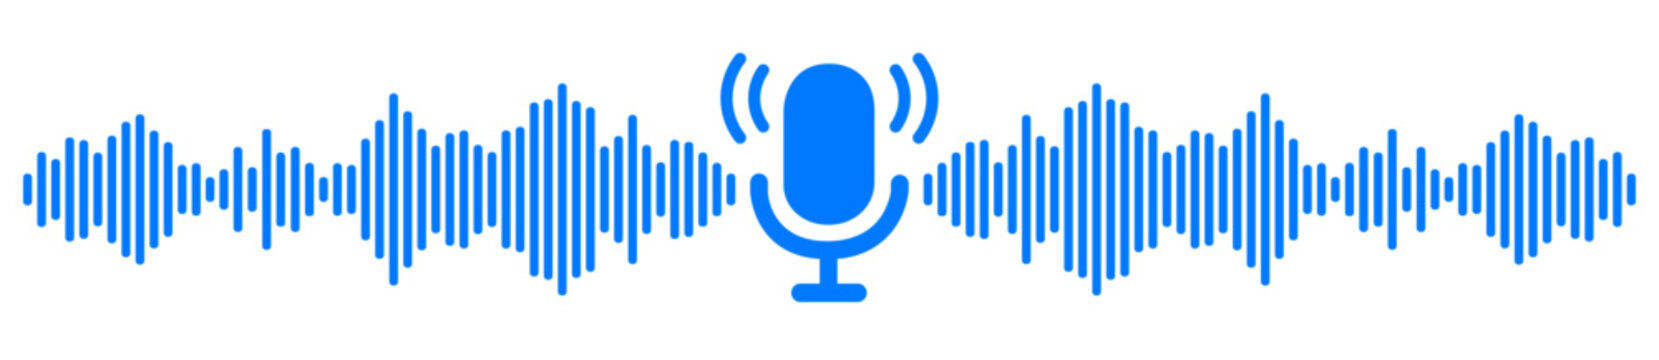 Recording voice message sign, recording conversation - stock vector